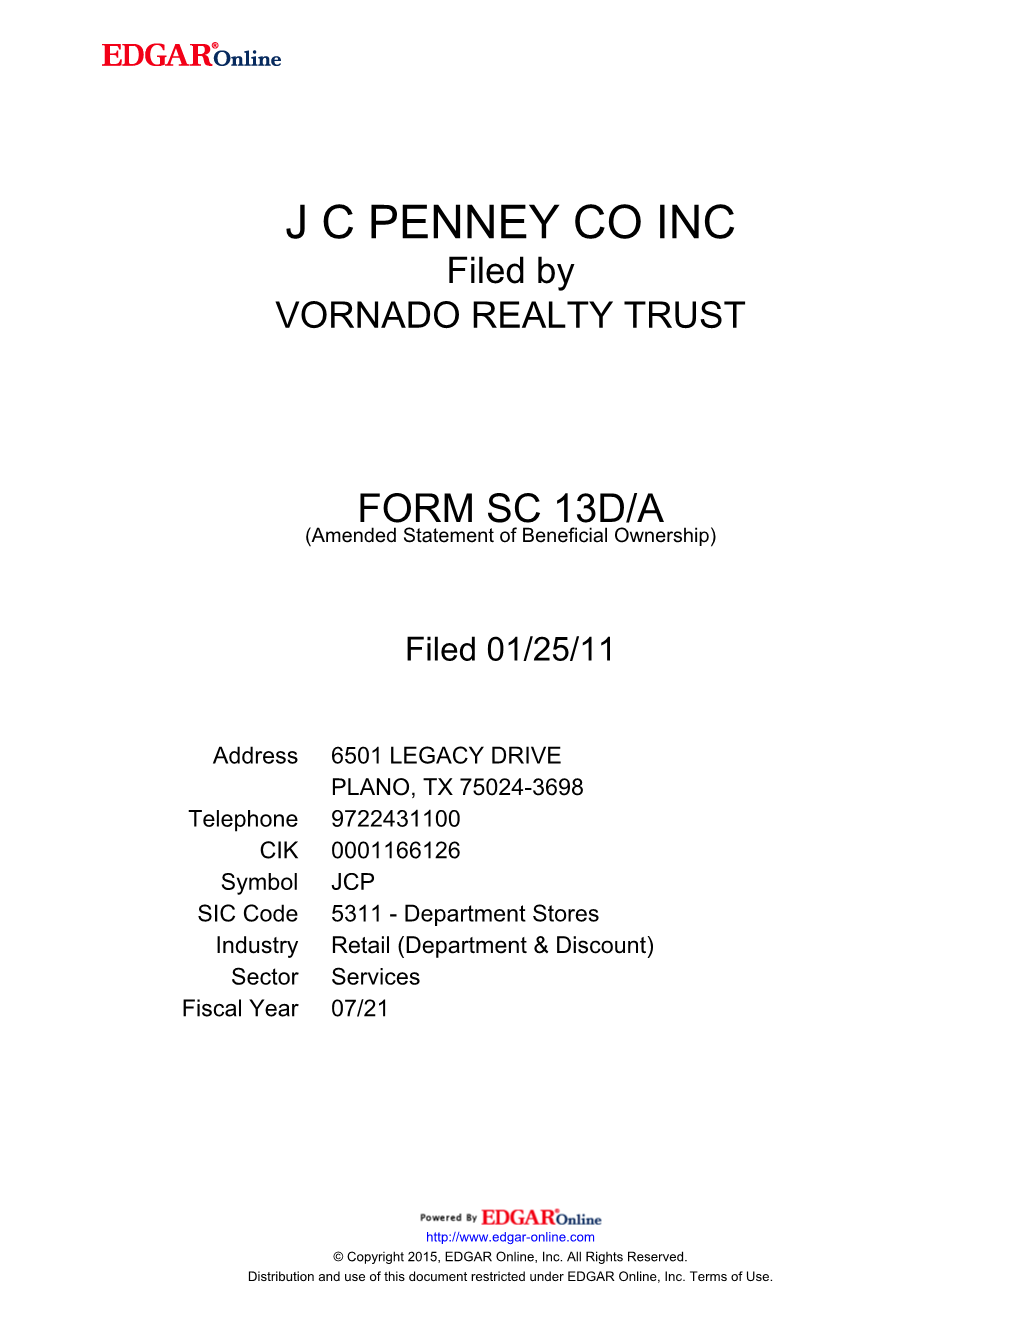 J C PENNEY CO INC Filed by VORNADO REALTY TRUST